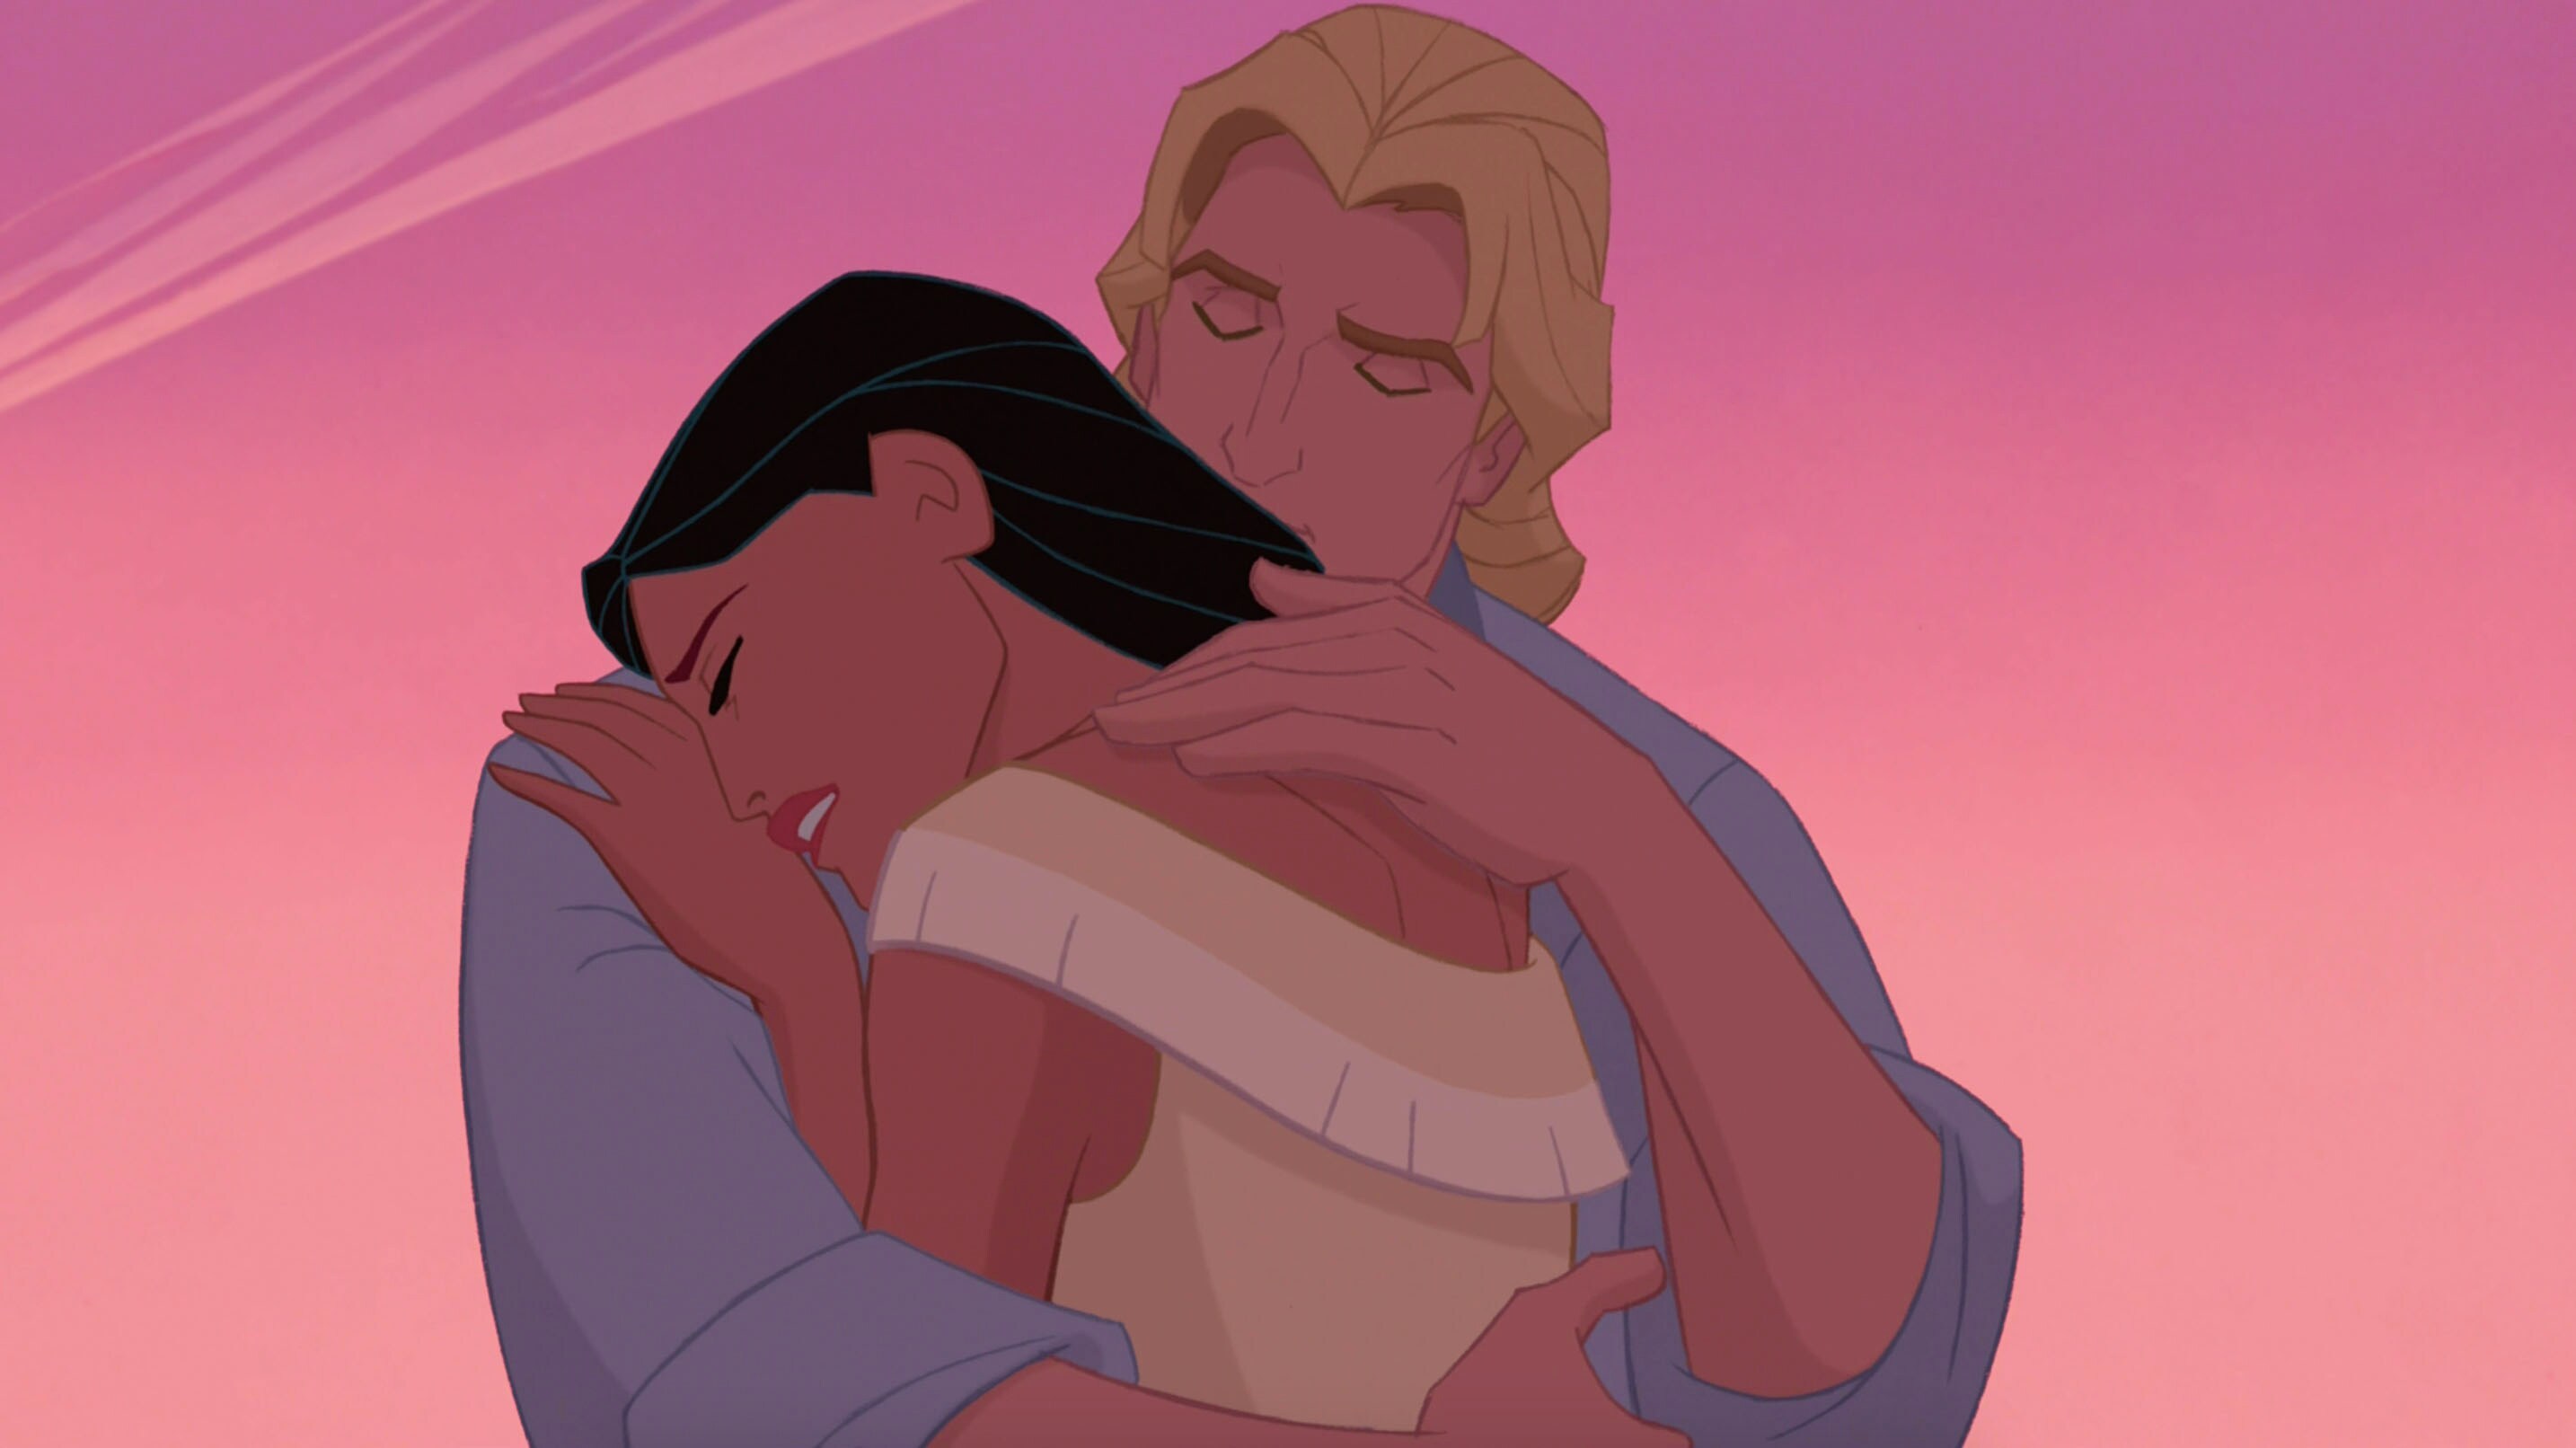 John Smith hugging Pocahontas in "Pocahontas"